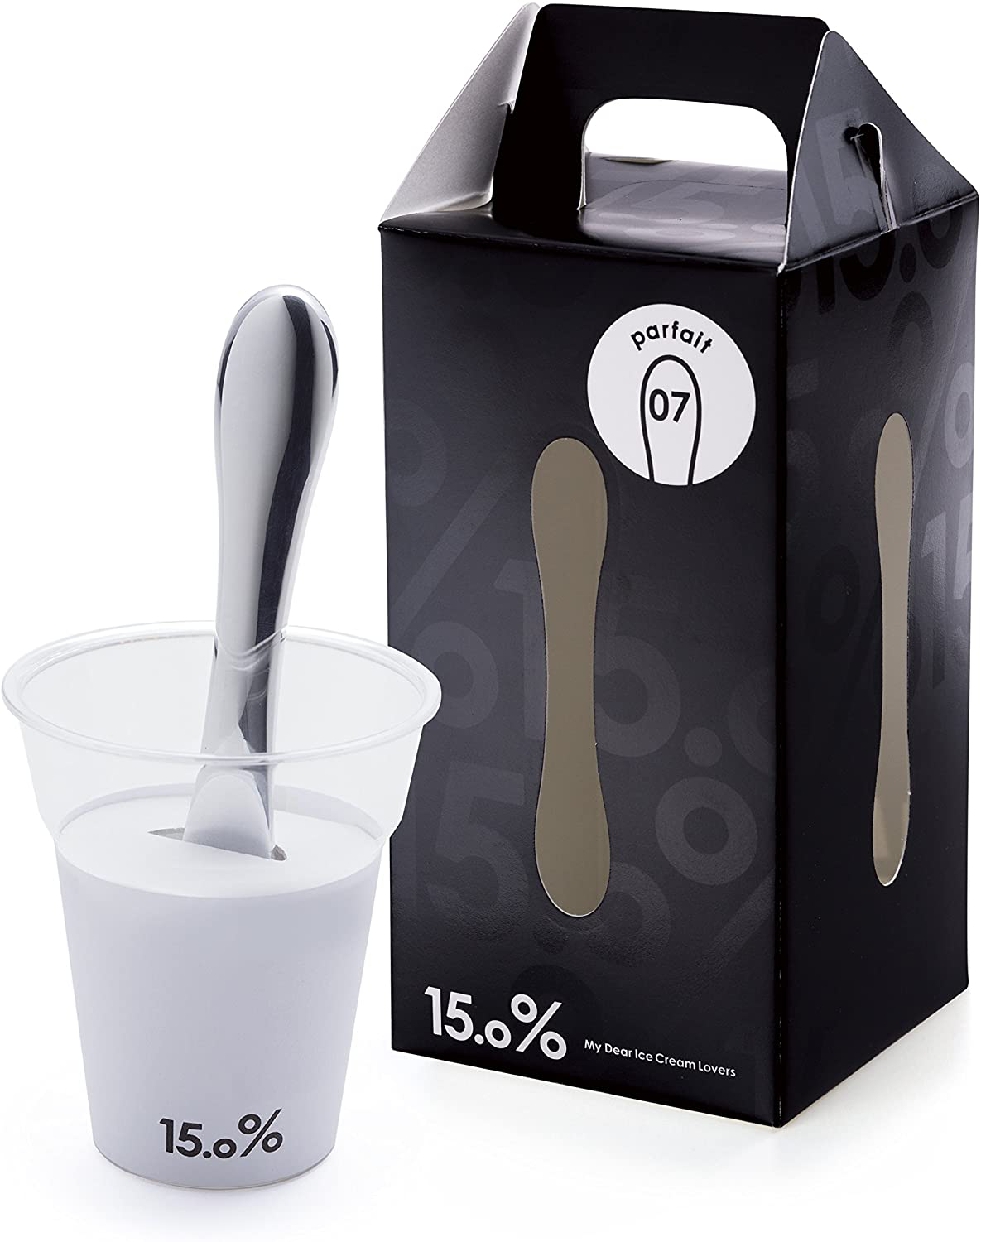 LEMNOS(レムノス) 15.0% アイスクリームスプーン / No.07 バニラパフェの商品画像サムネ2 